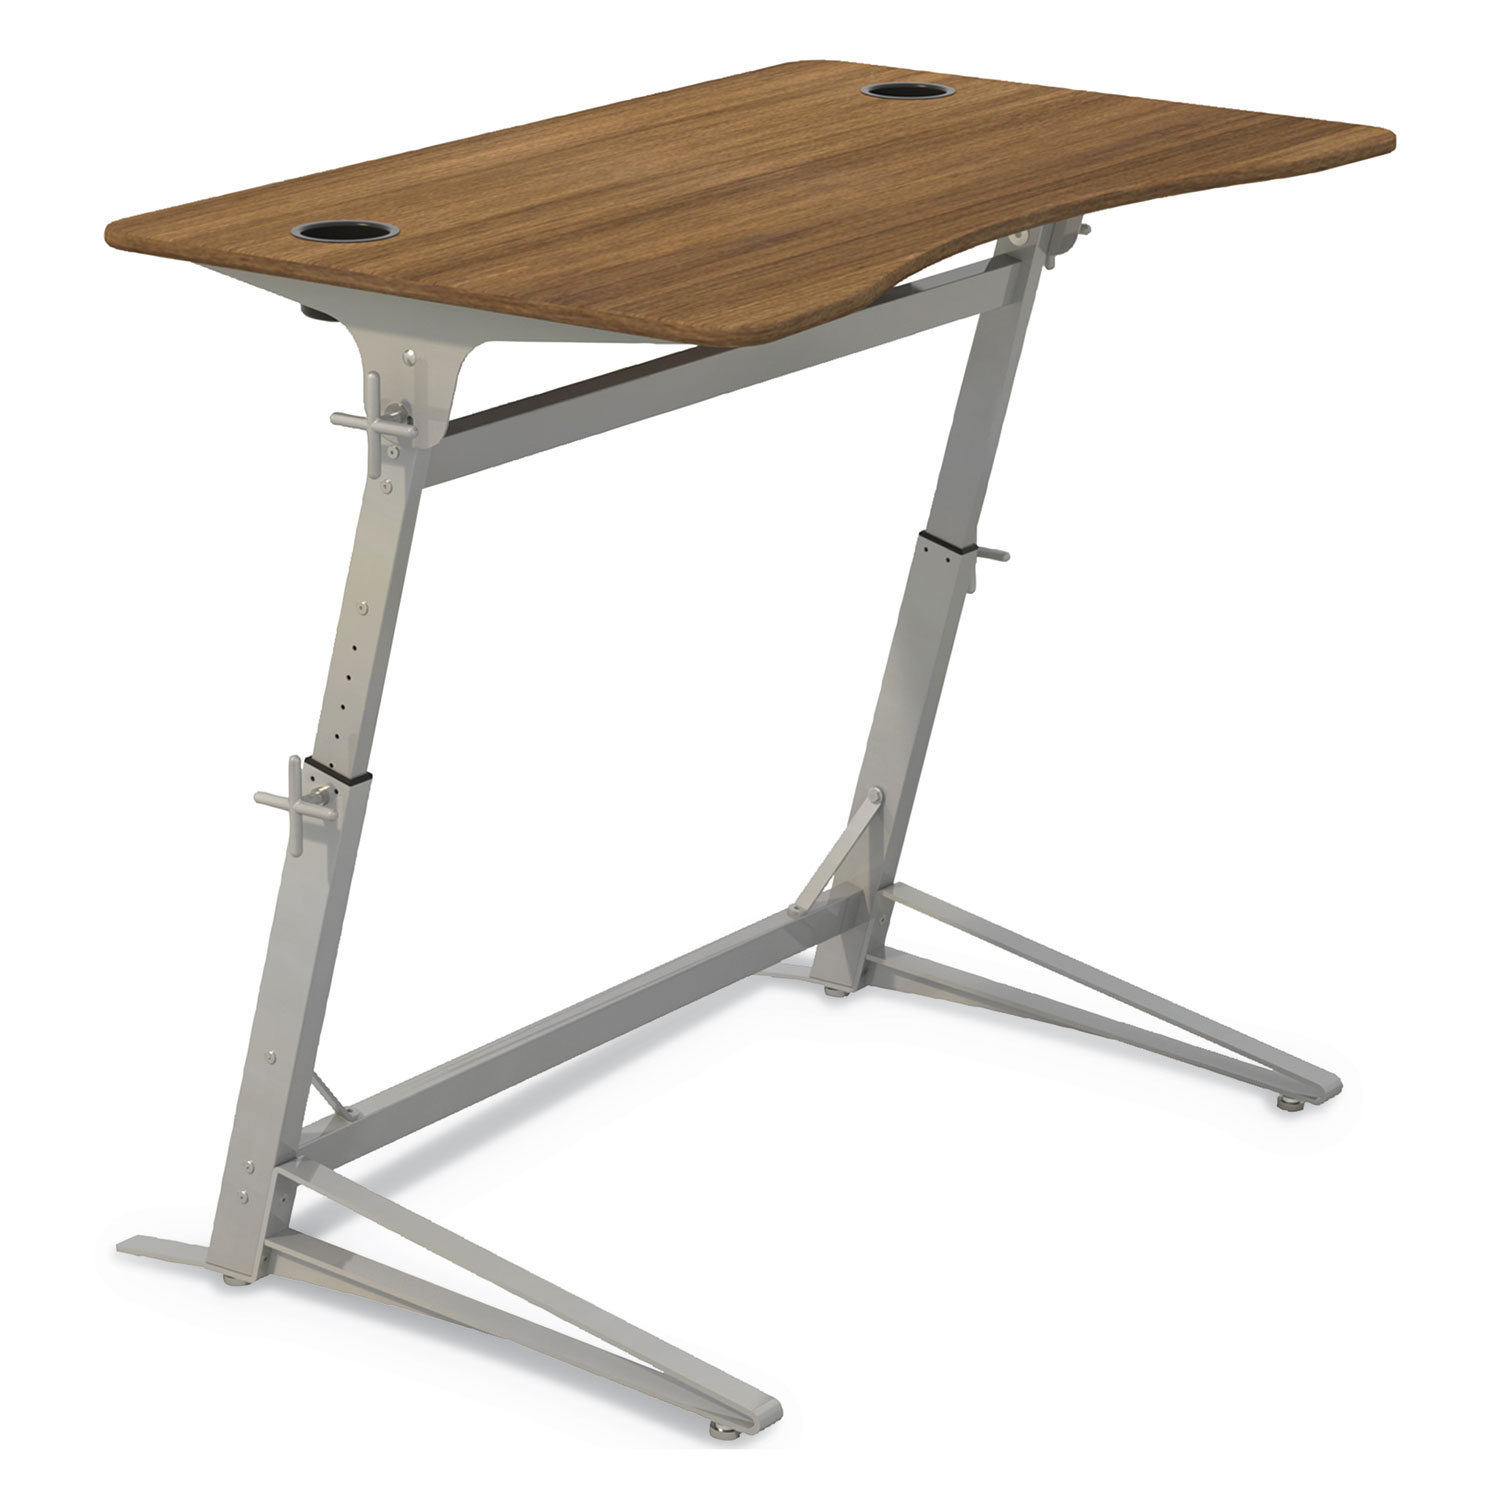  Safco 1959WL Verve Standing Desk, 47.25w x 31.75d x 42h, Walnut (SAF1959WL) 